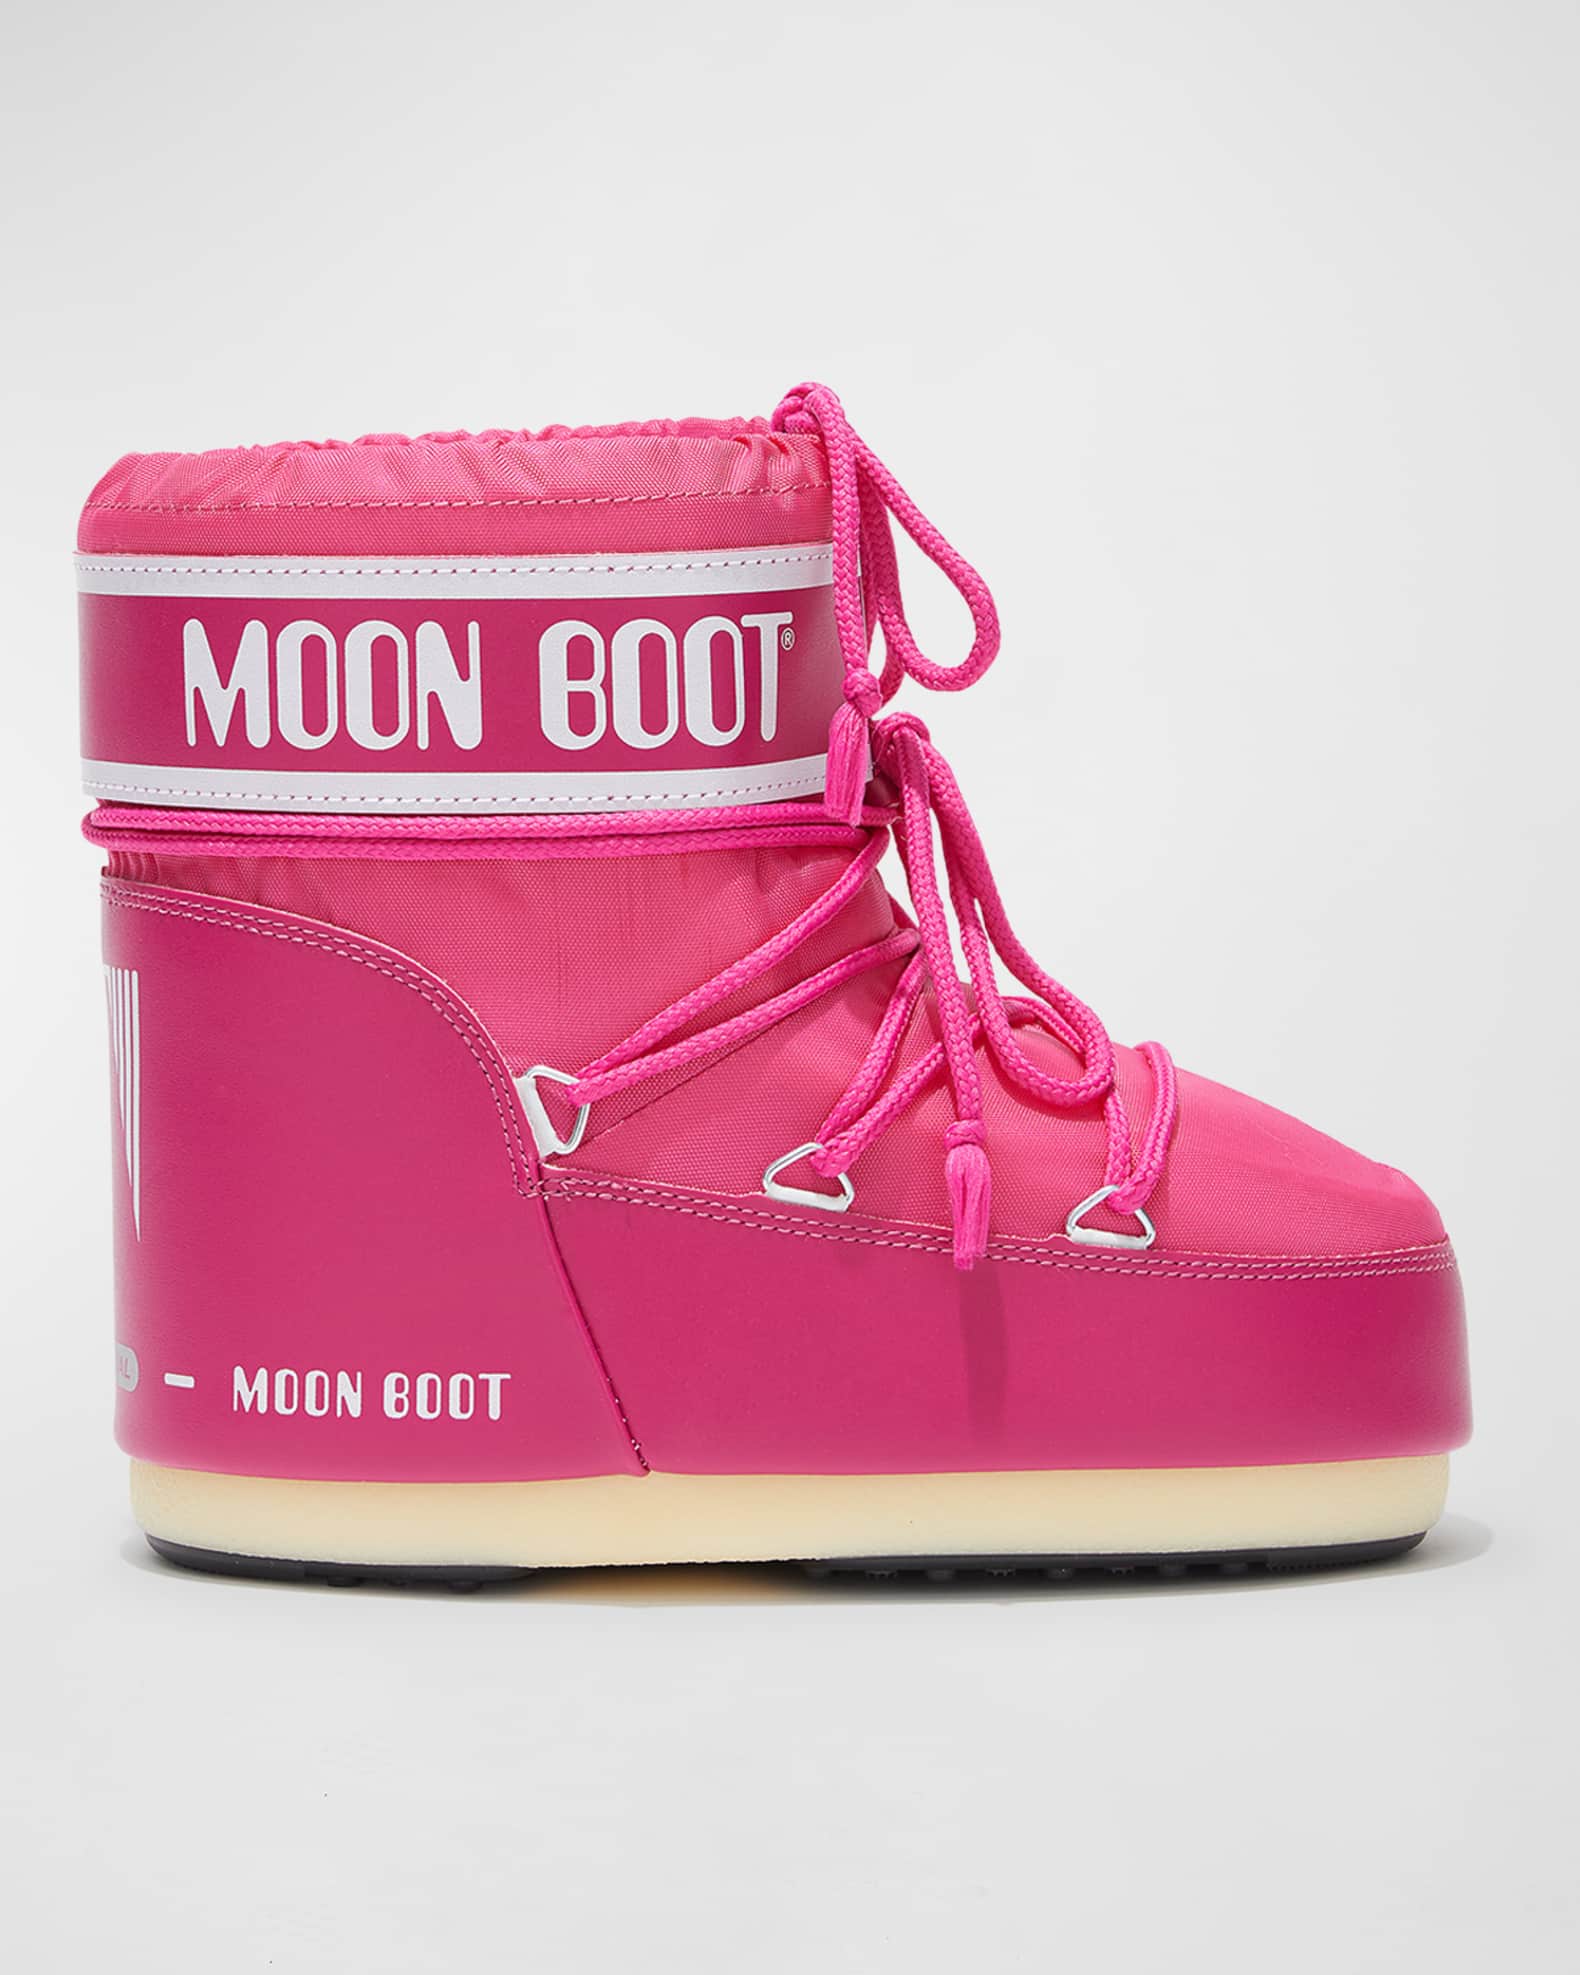 Light Low Boots - Moon Boot - PVC - Black